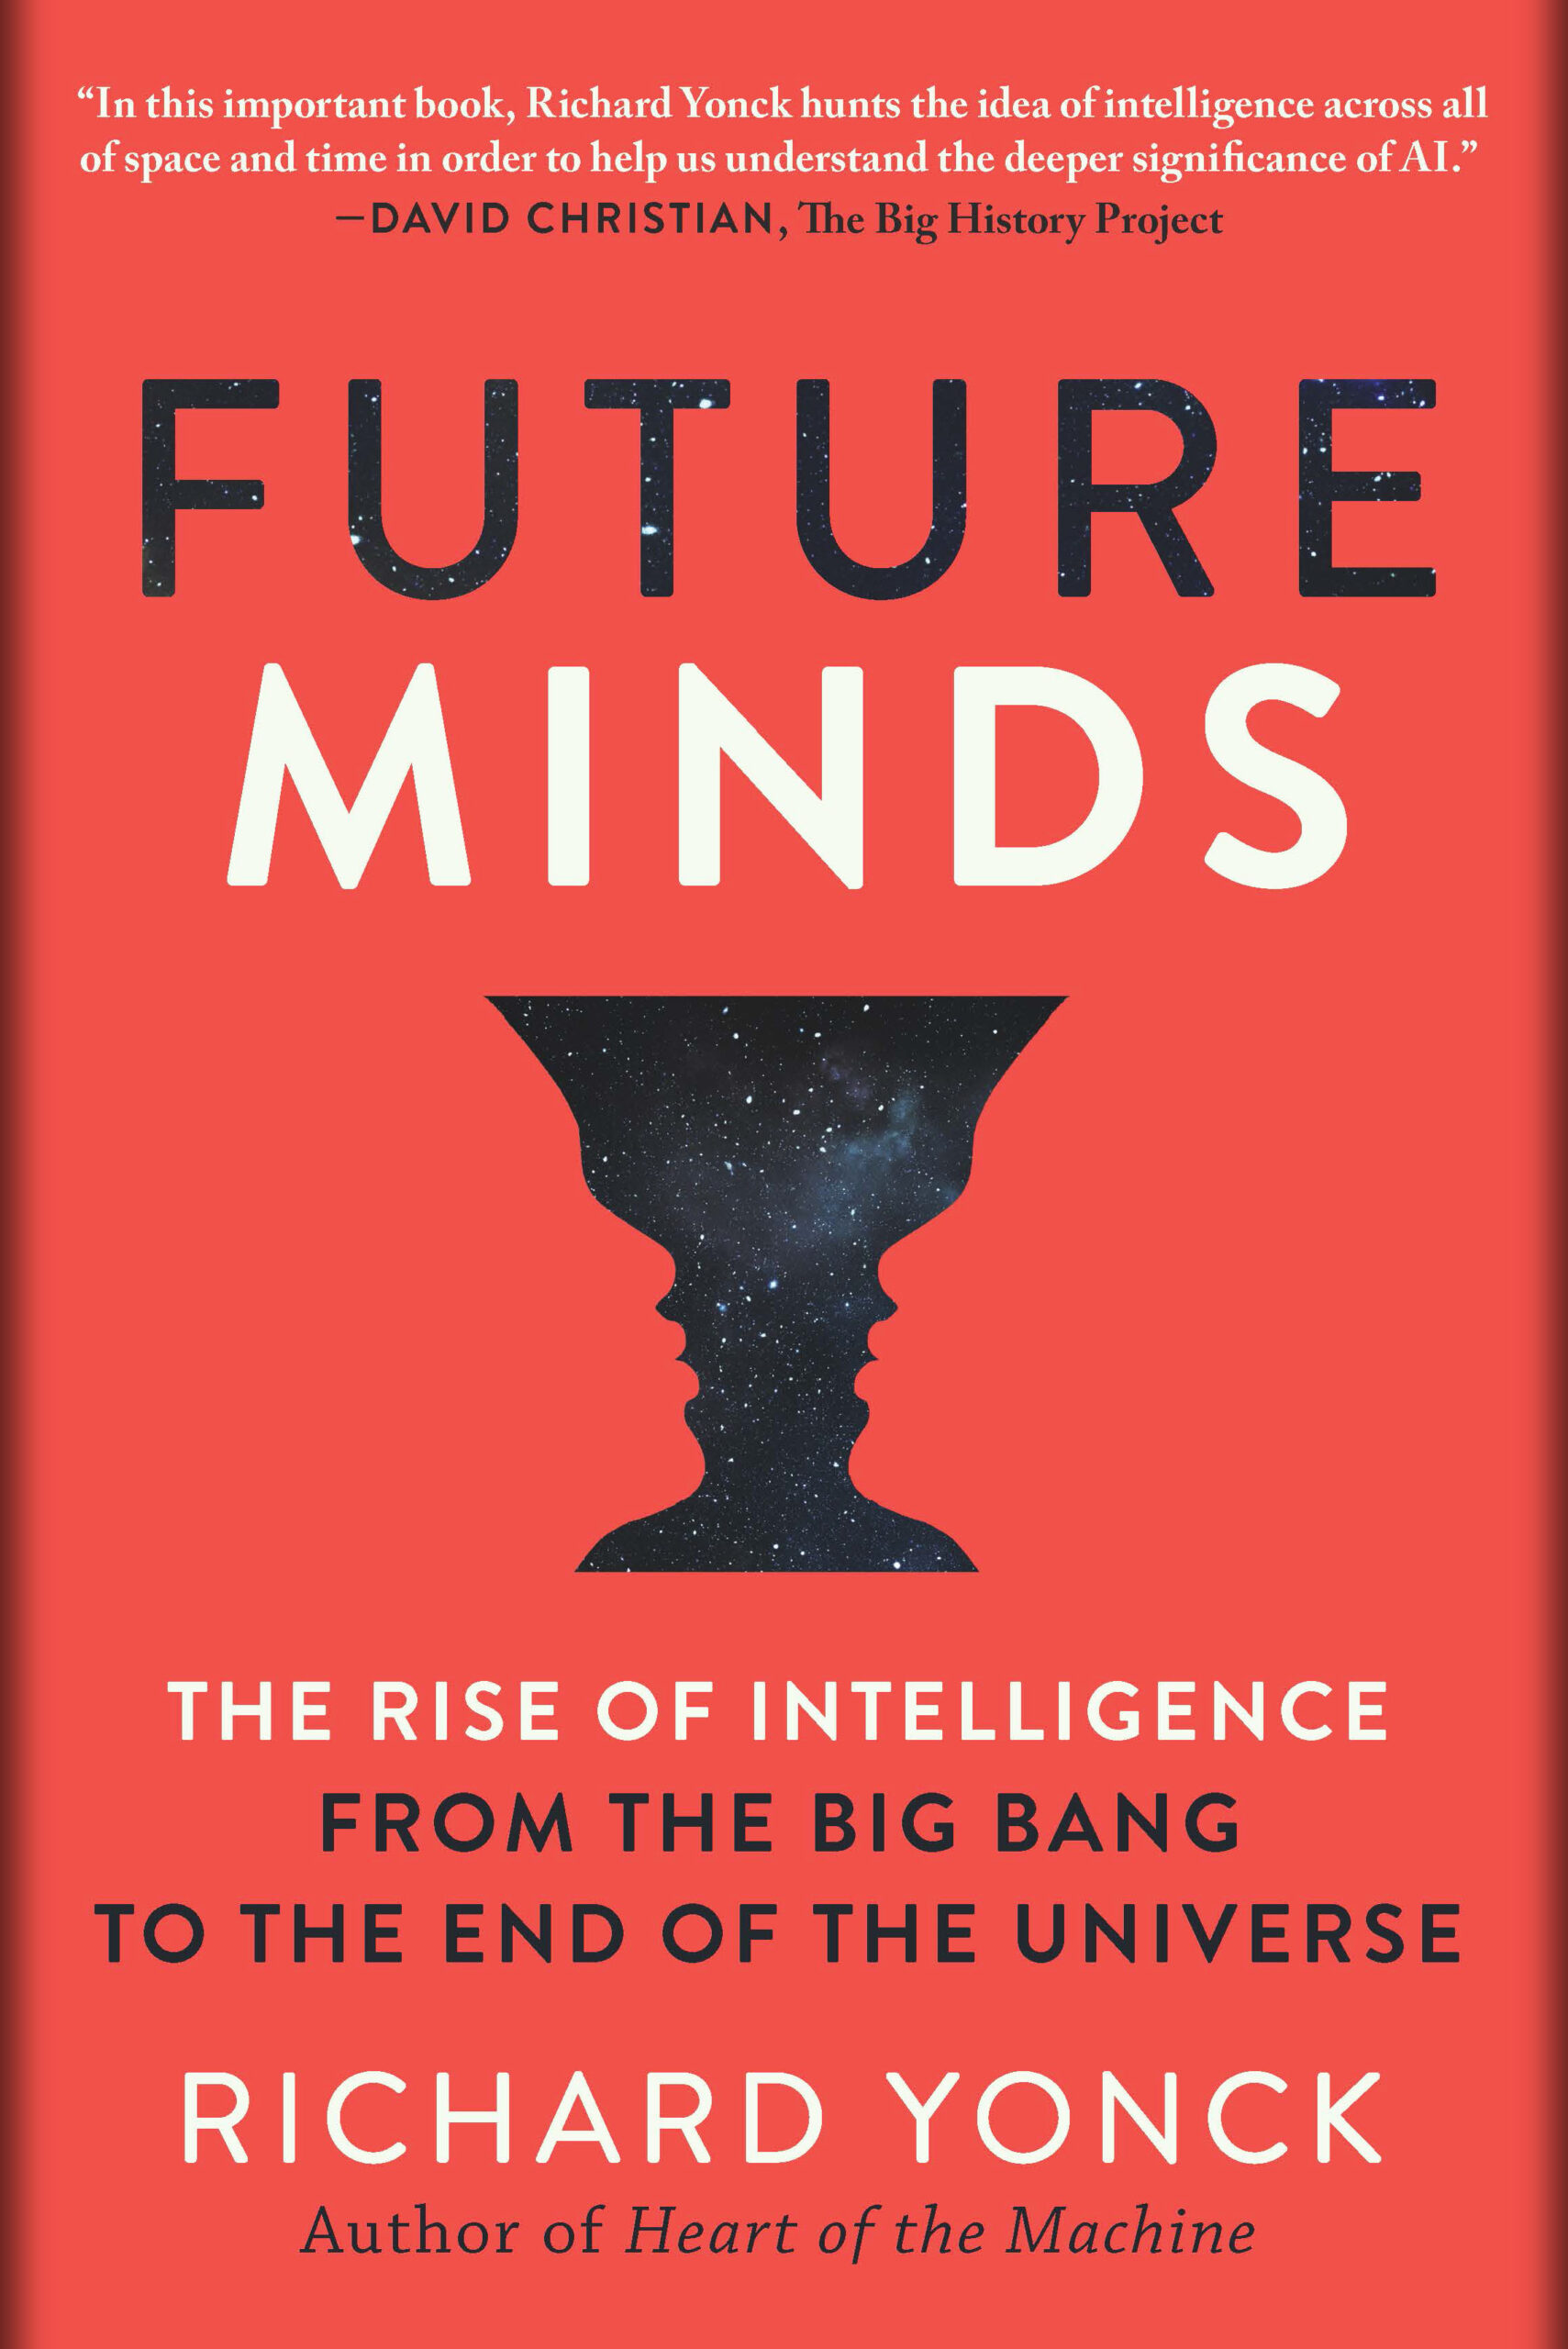 Richard Yonck Futurist - Future Minds book cover